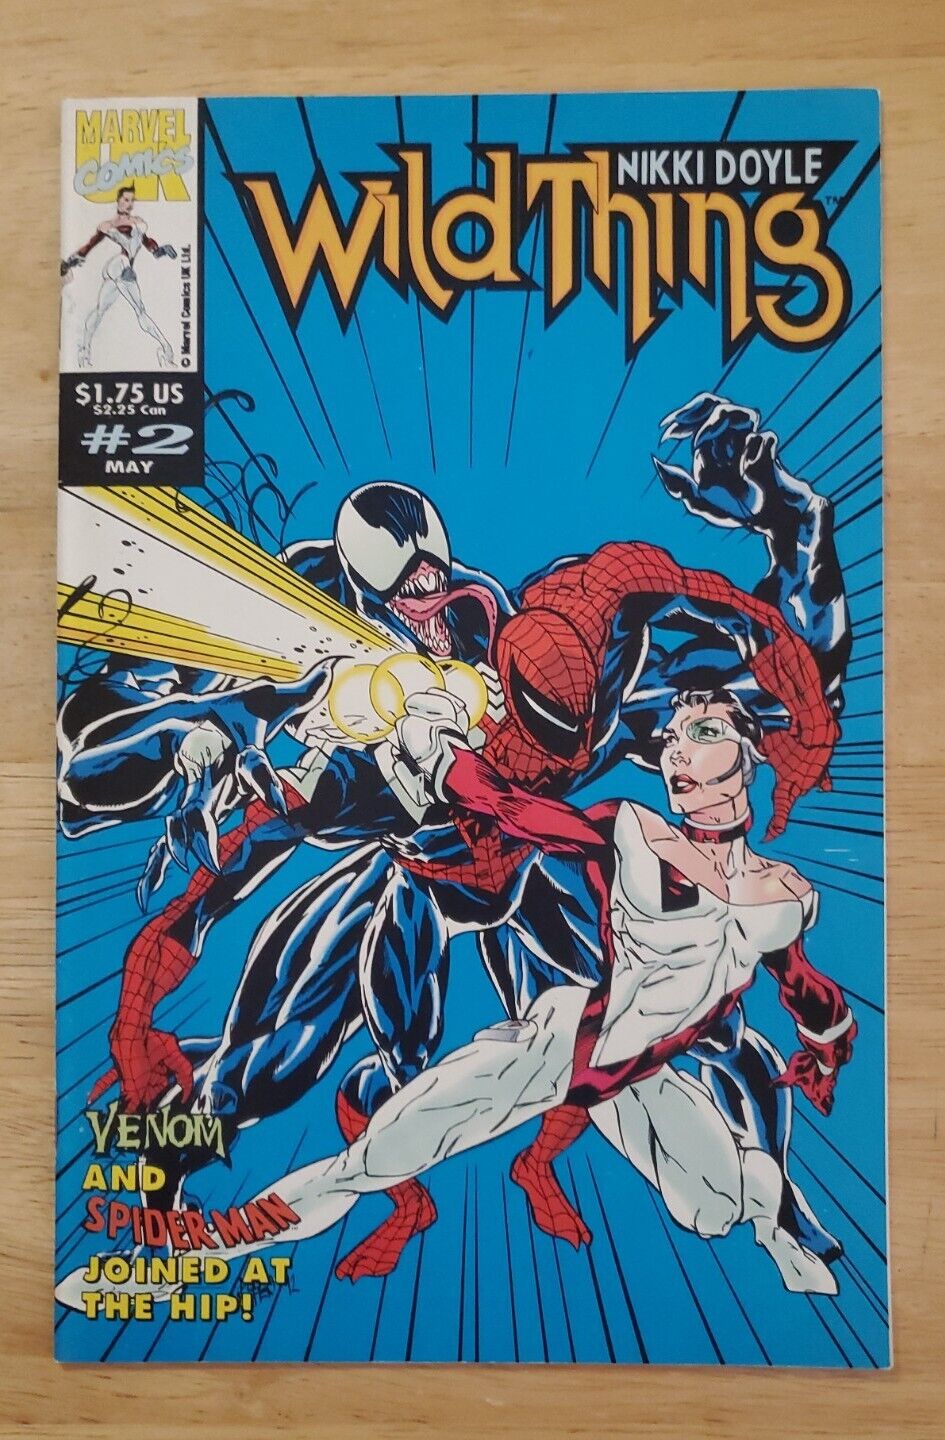 Wildthing Issue 2 Vintage Marvel Comics UK Ltd 1993